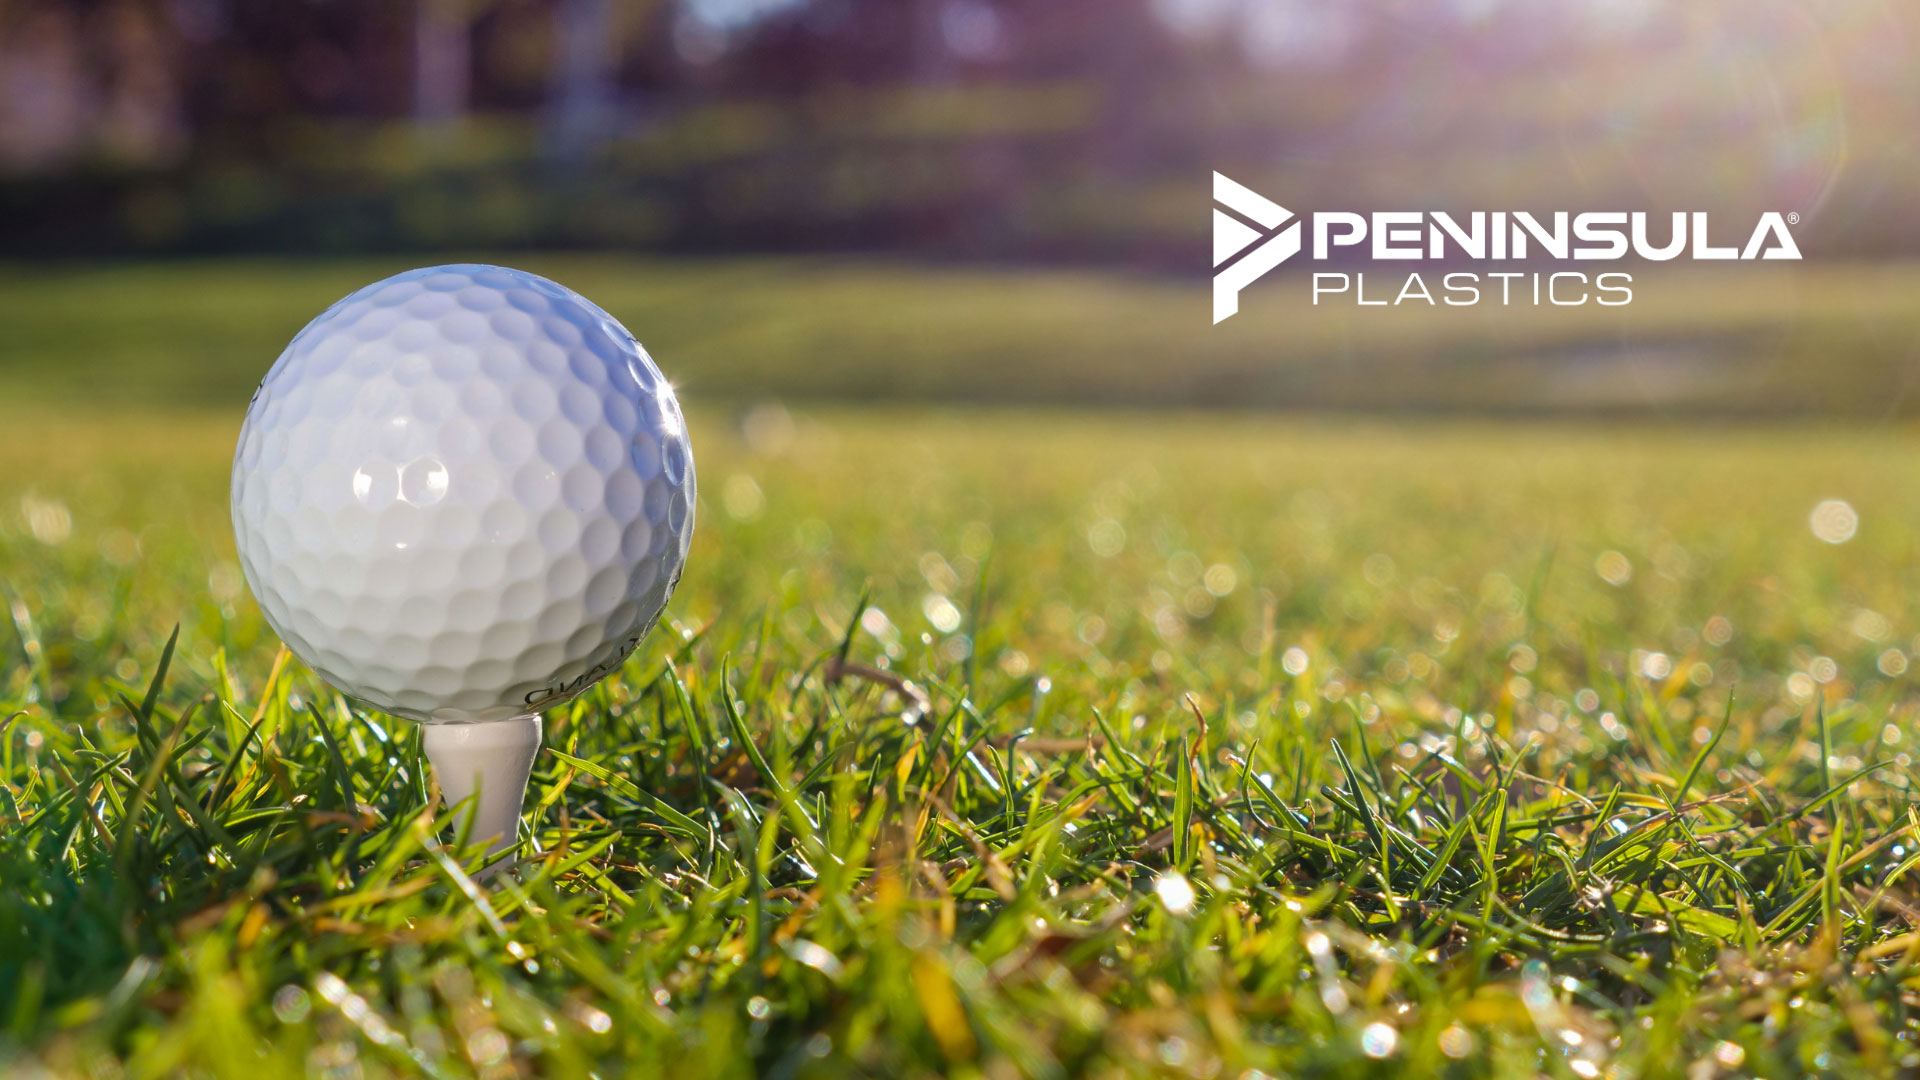 Golf ball on tee and peninsula plastic logo